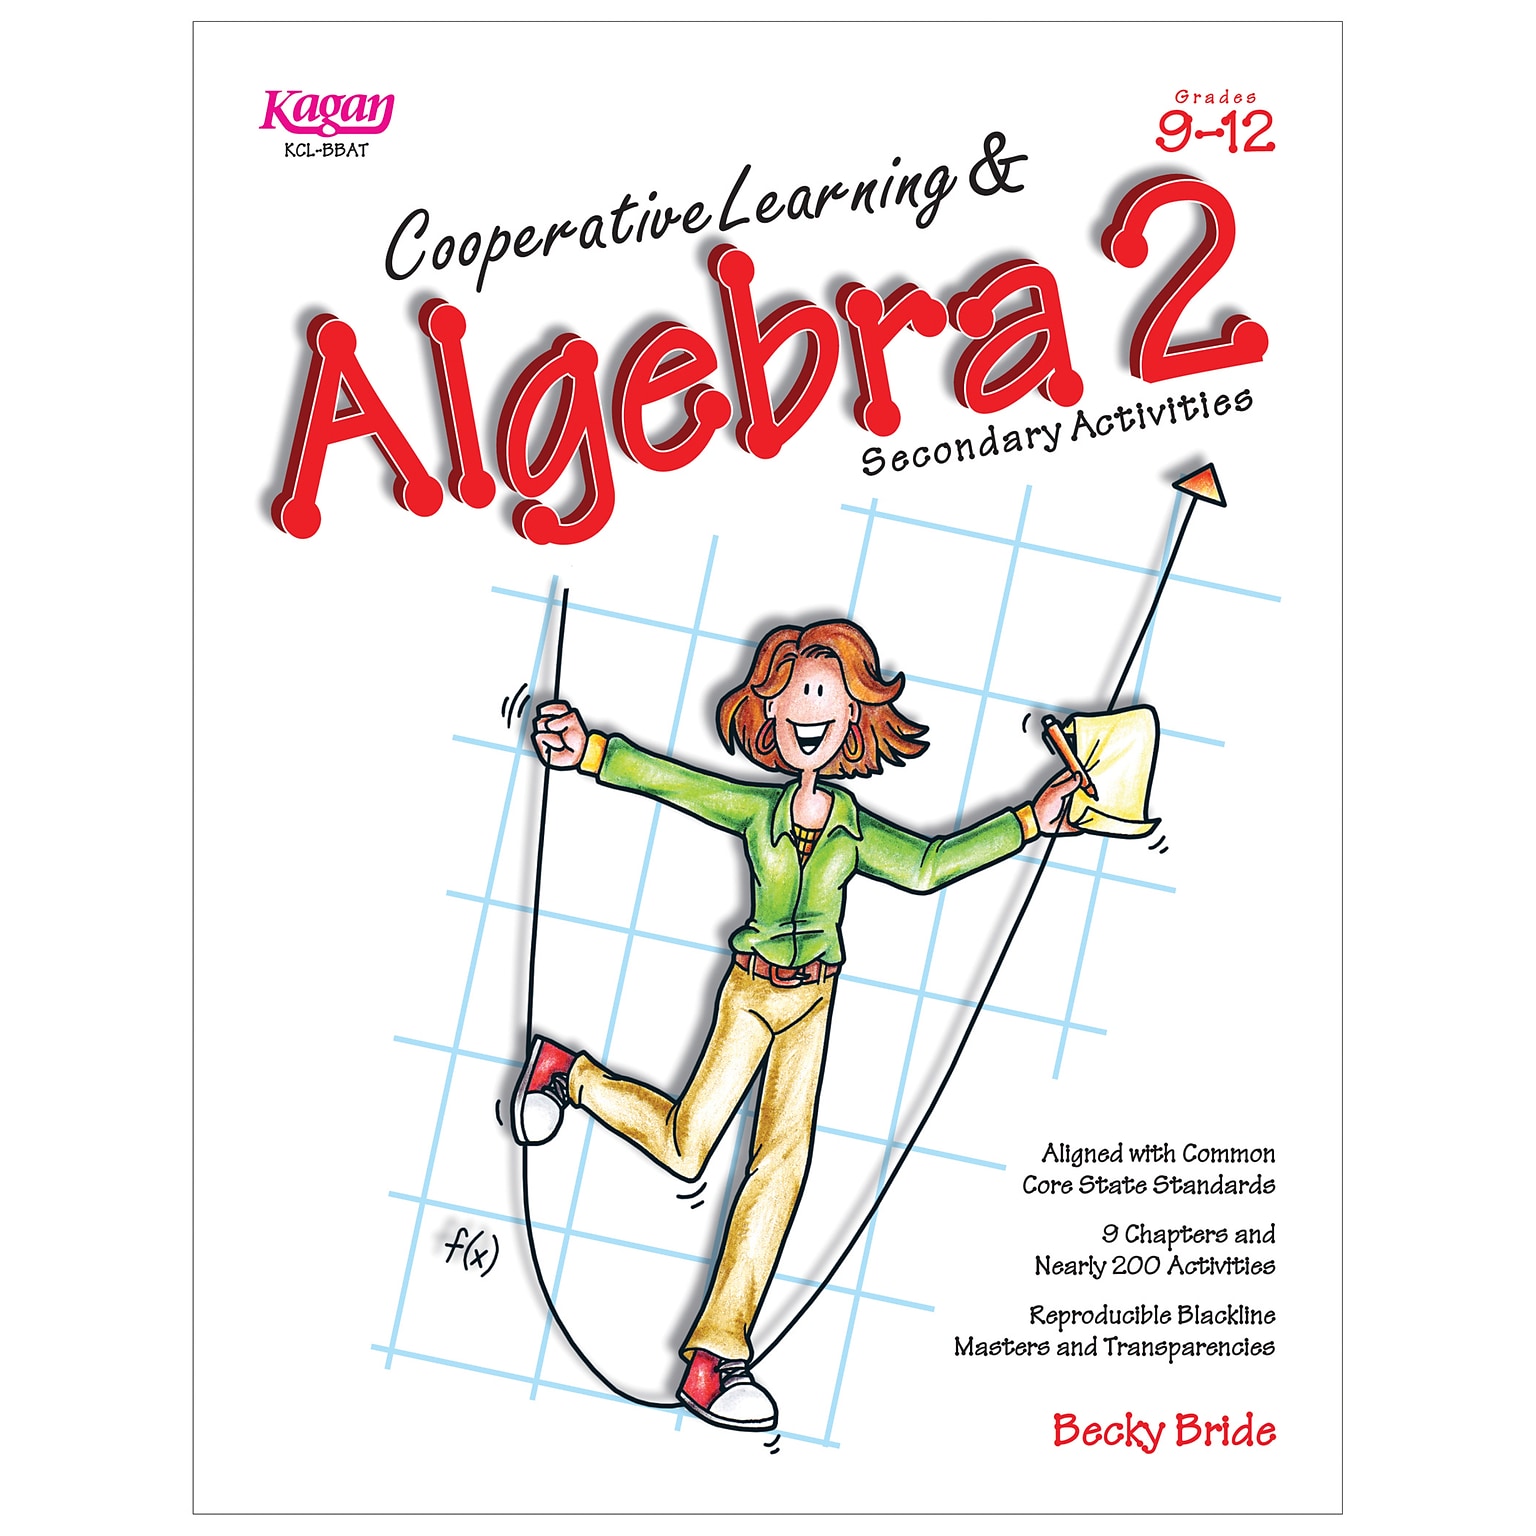 Cooperative Learning & Algebra 2 Secondary Activities Book, Grade 9-12, Paperback (9781933445373)